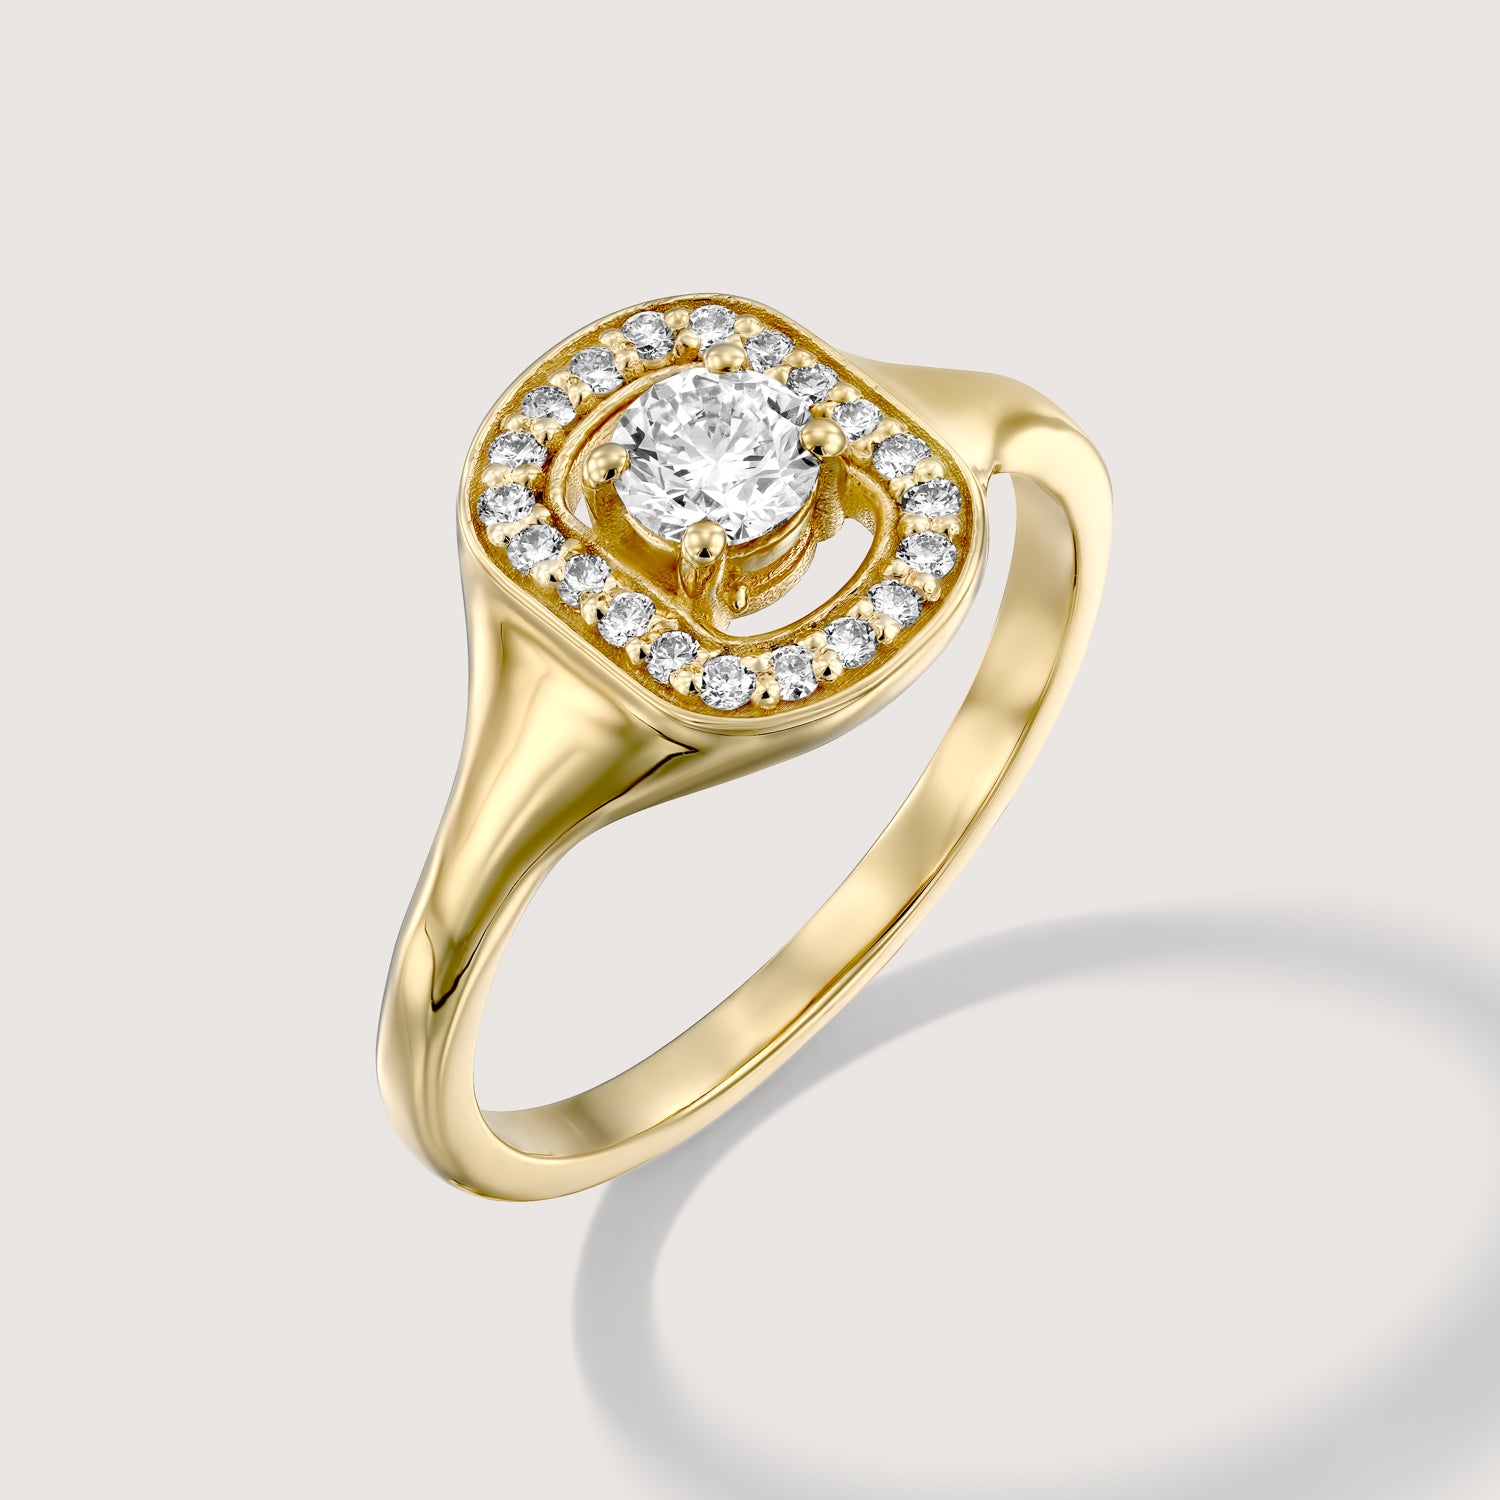 Ring 05 - White Diamonds